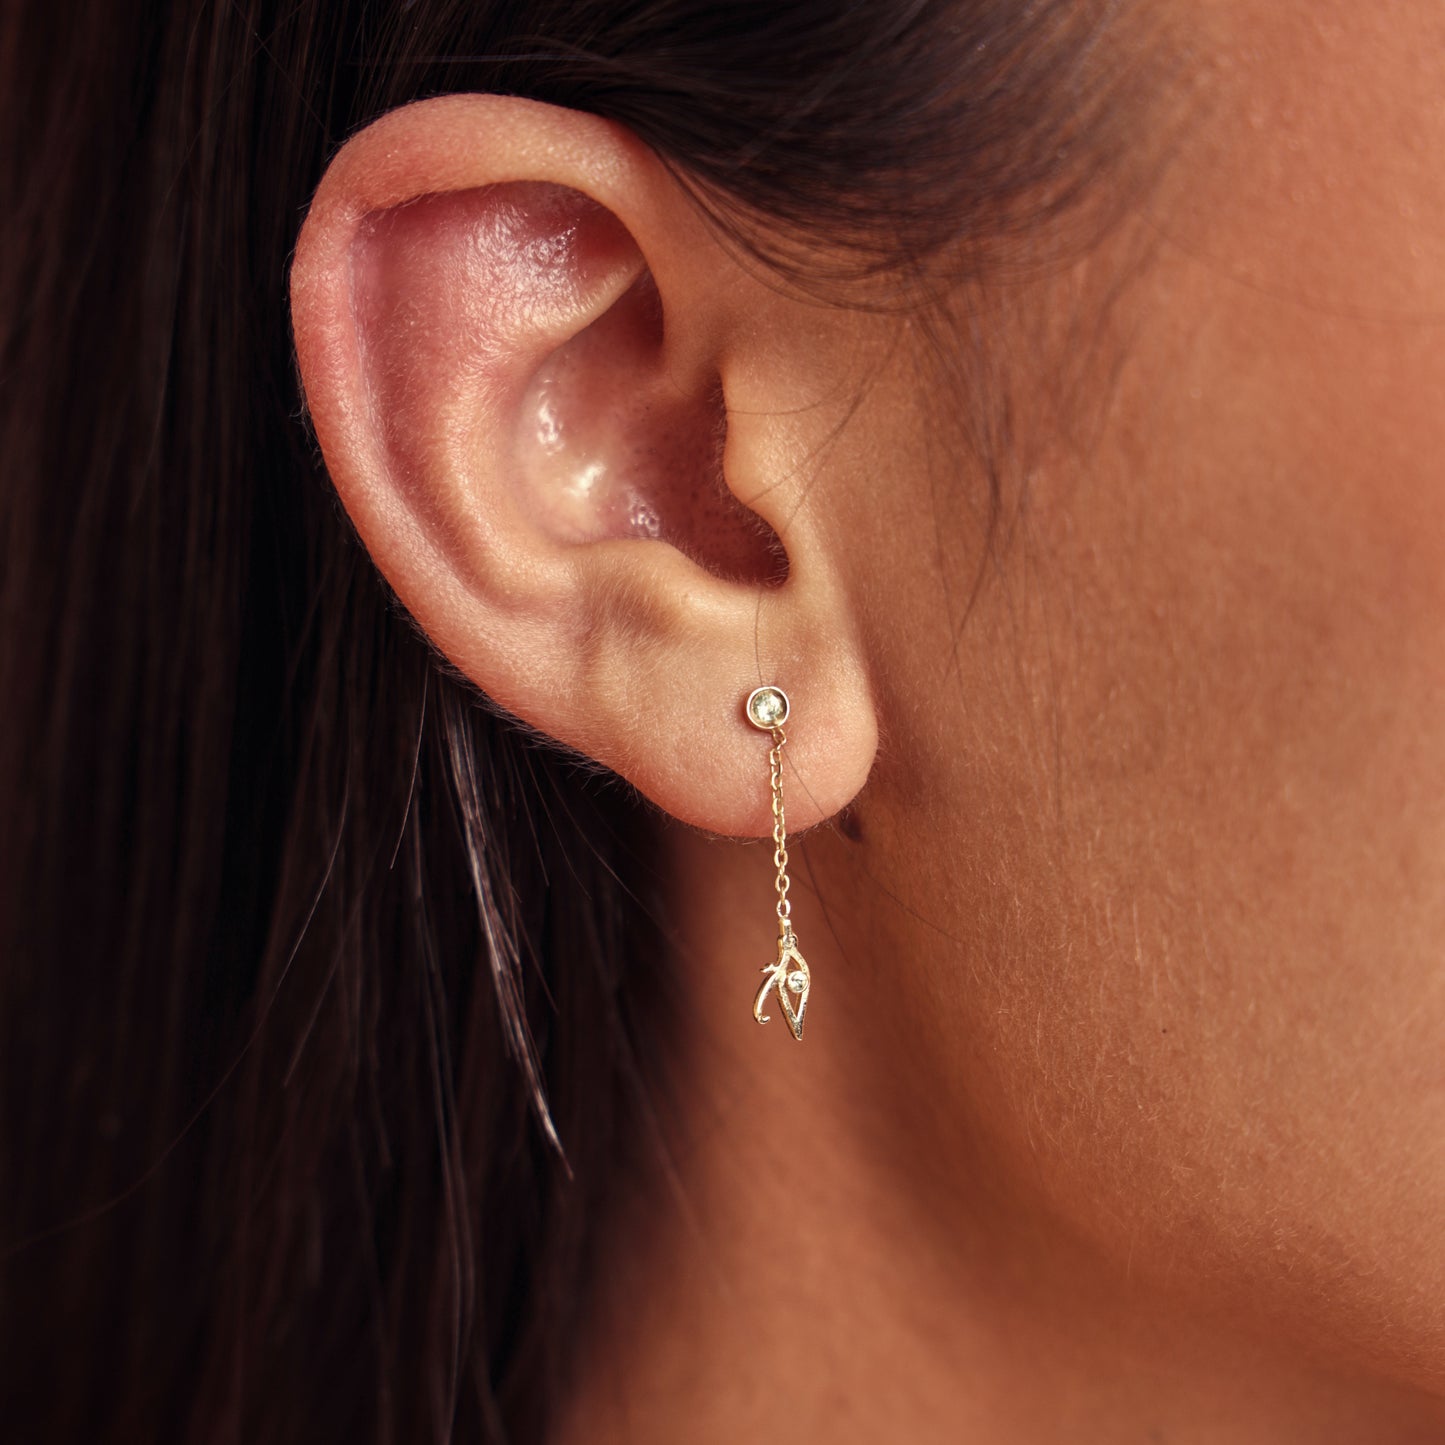 Discover more than 242 eye of horus earrings best